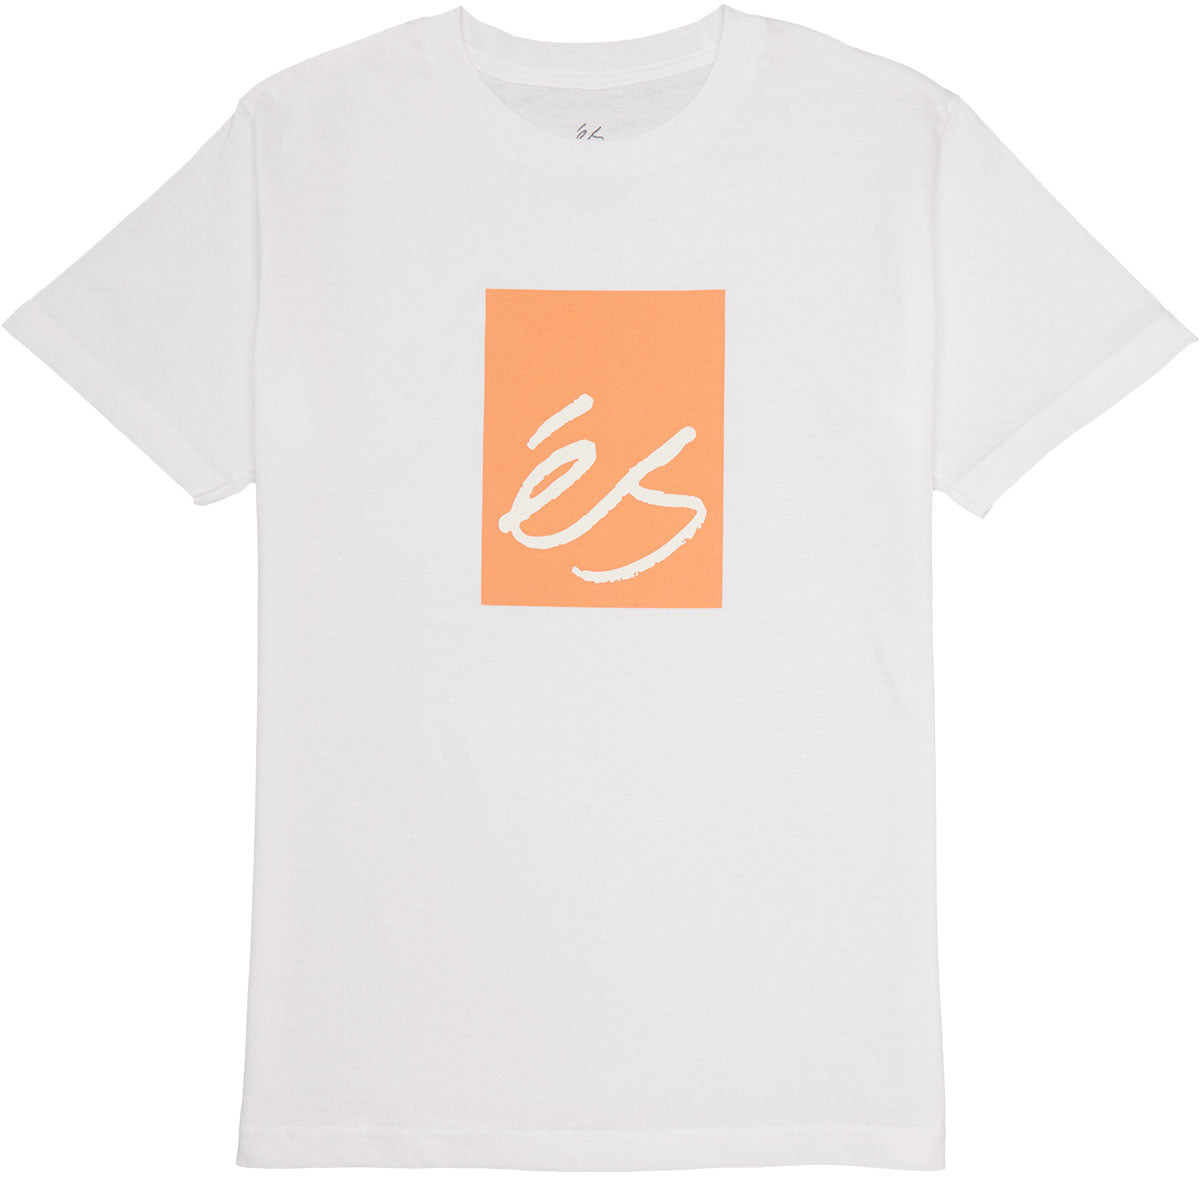 eS Main Block T-Shirt - White image 1